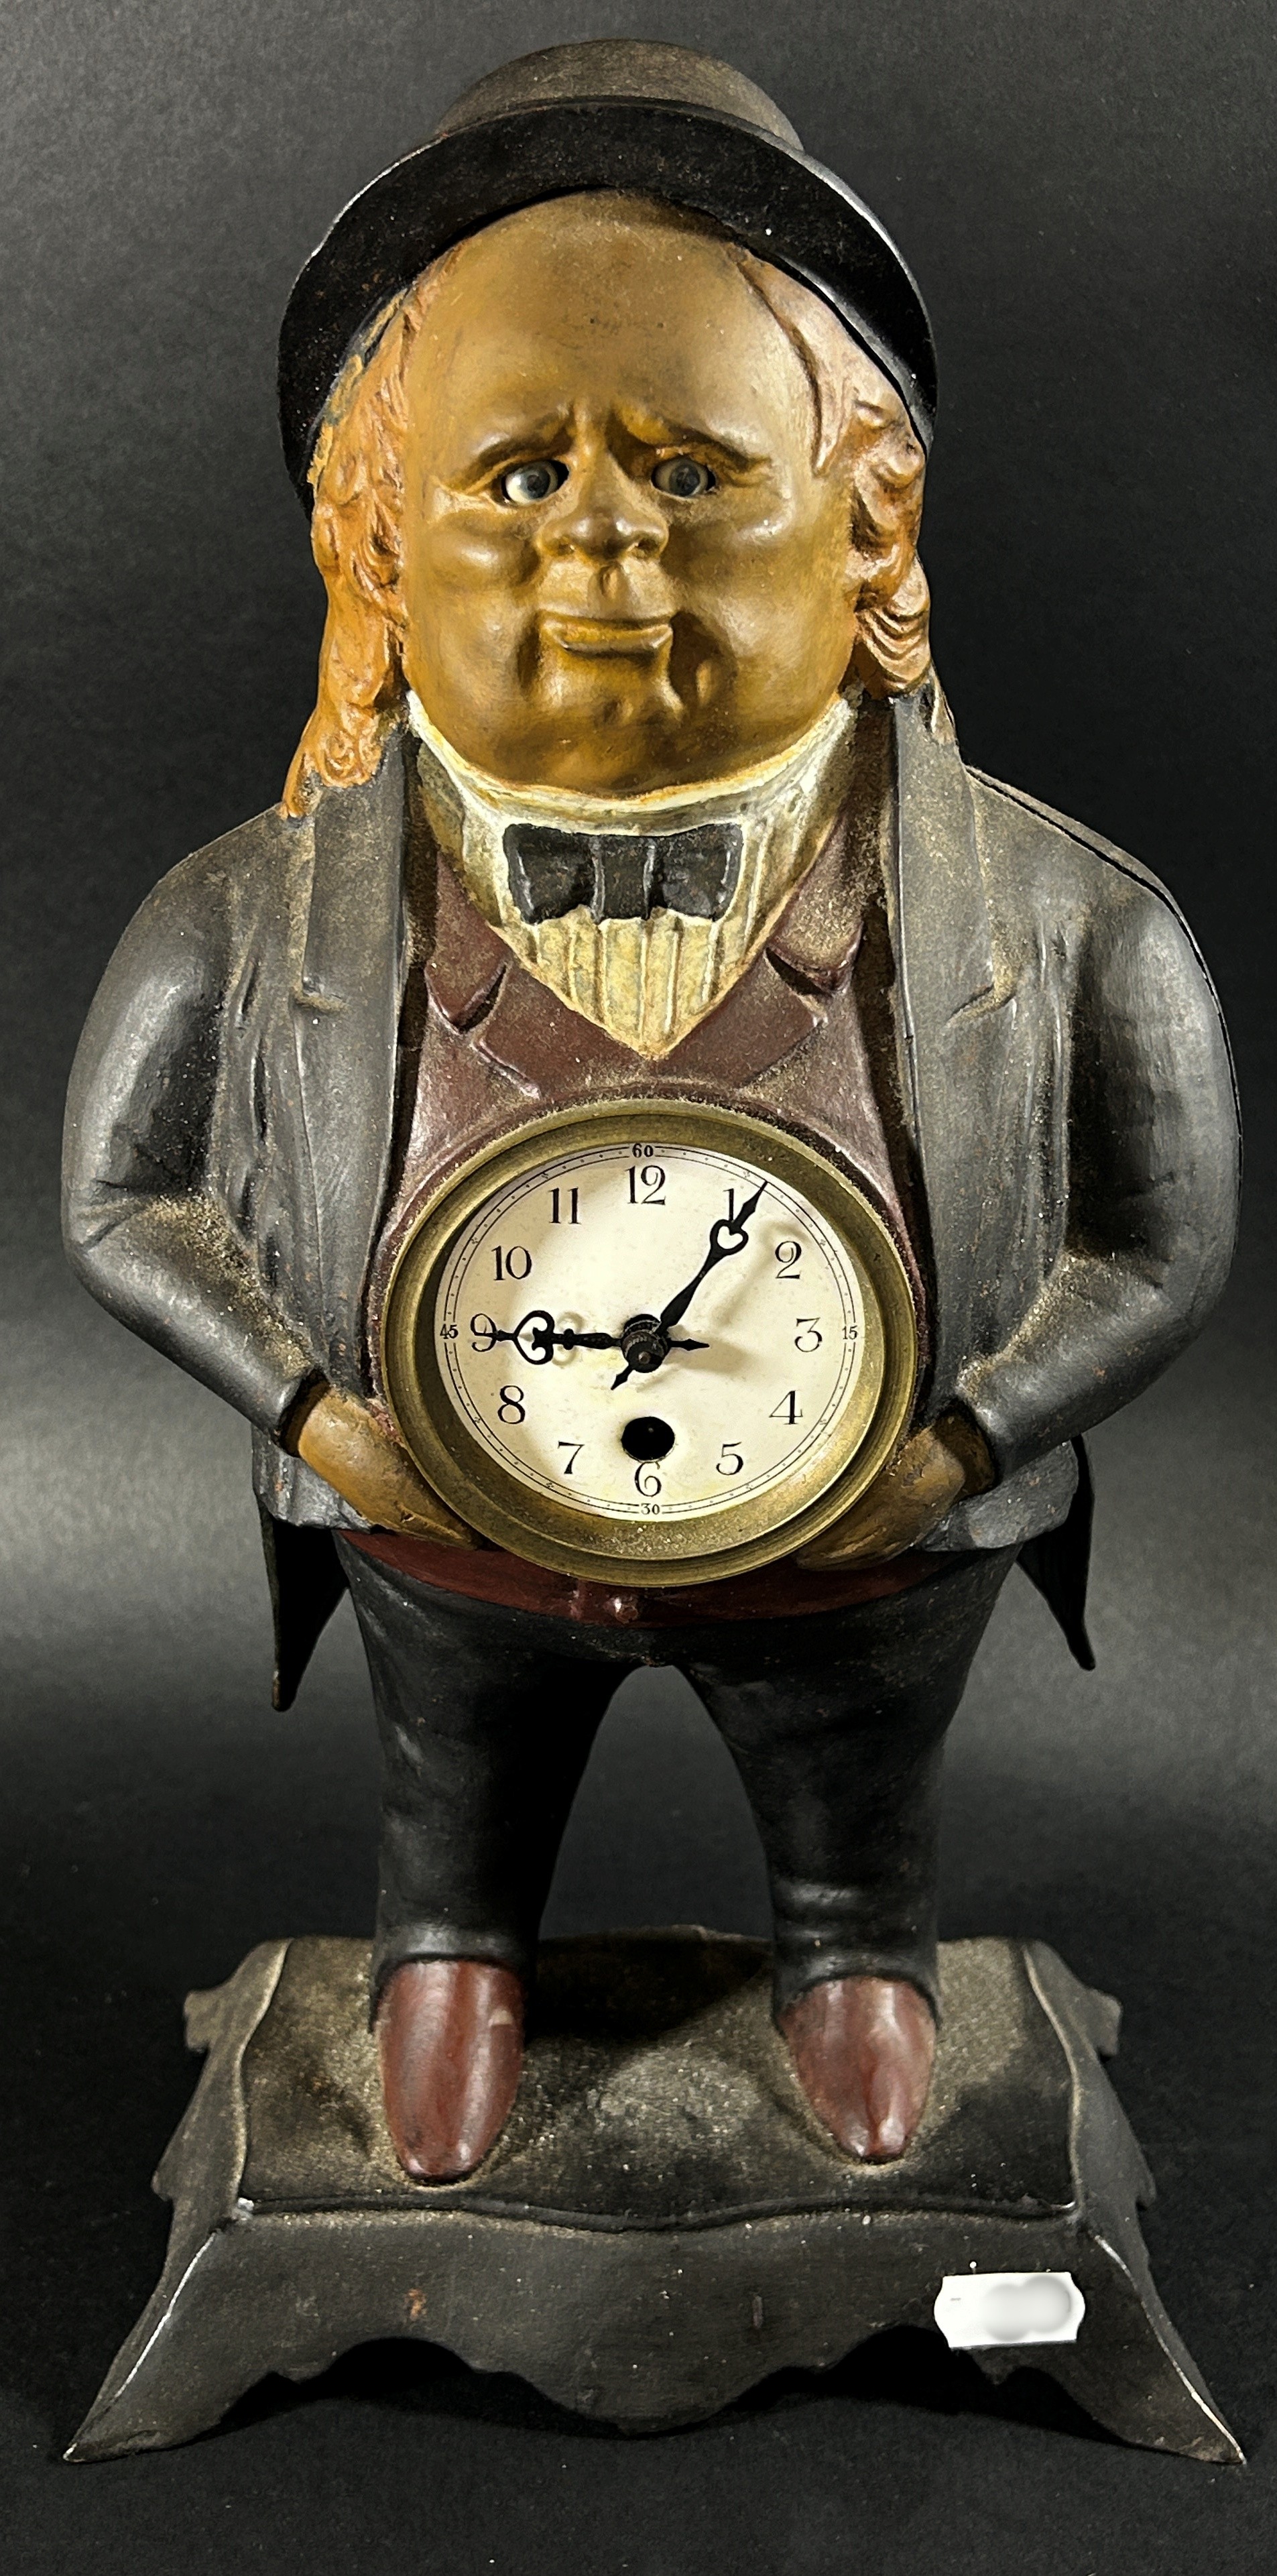 A John Bull Blinking Eye mantle clock made from cast iron, 41cm